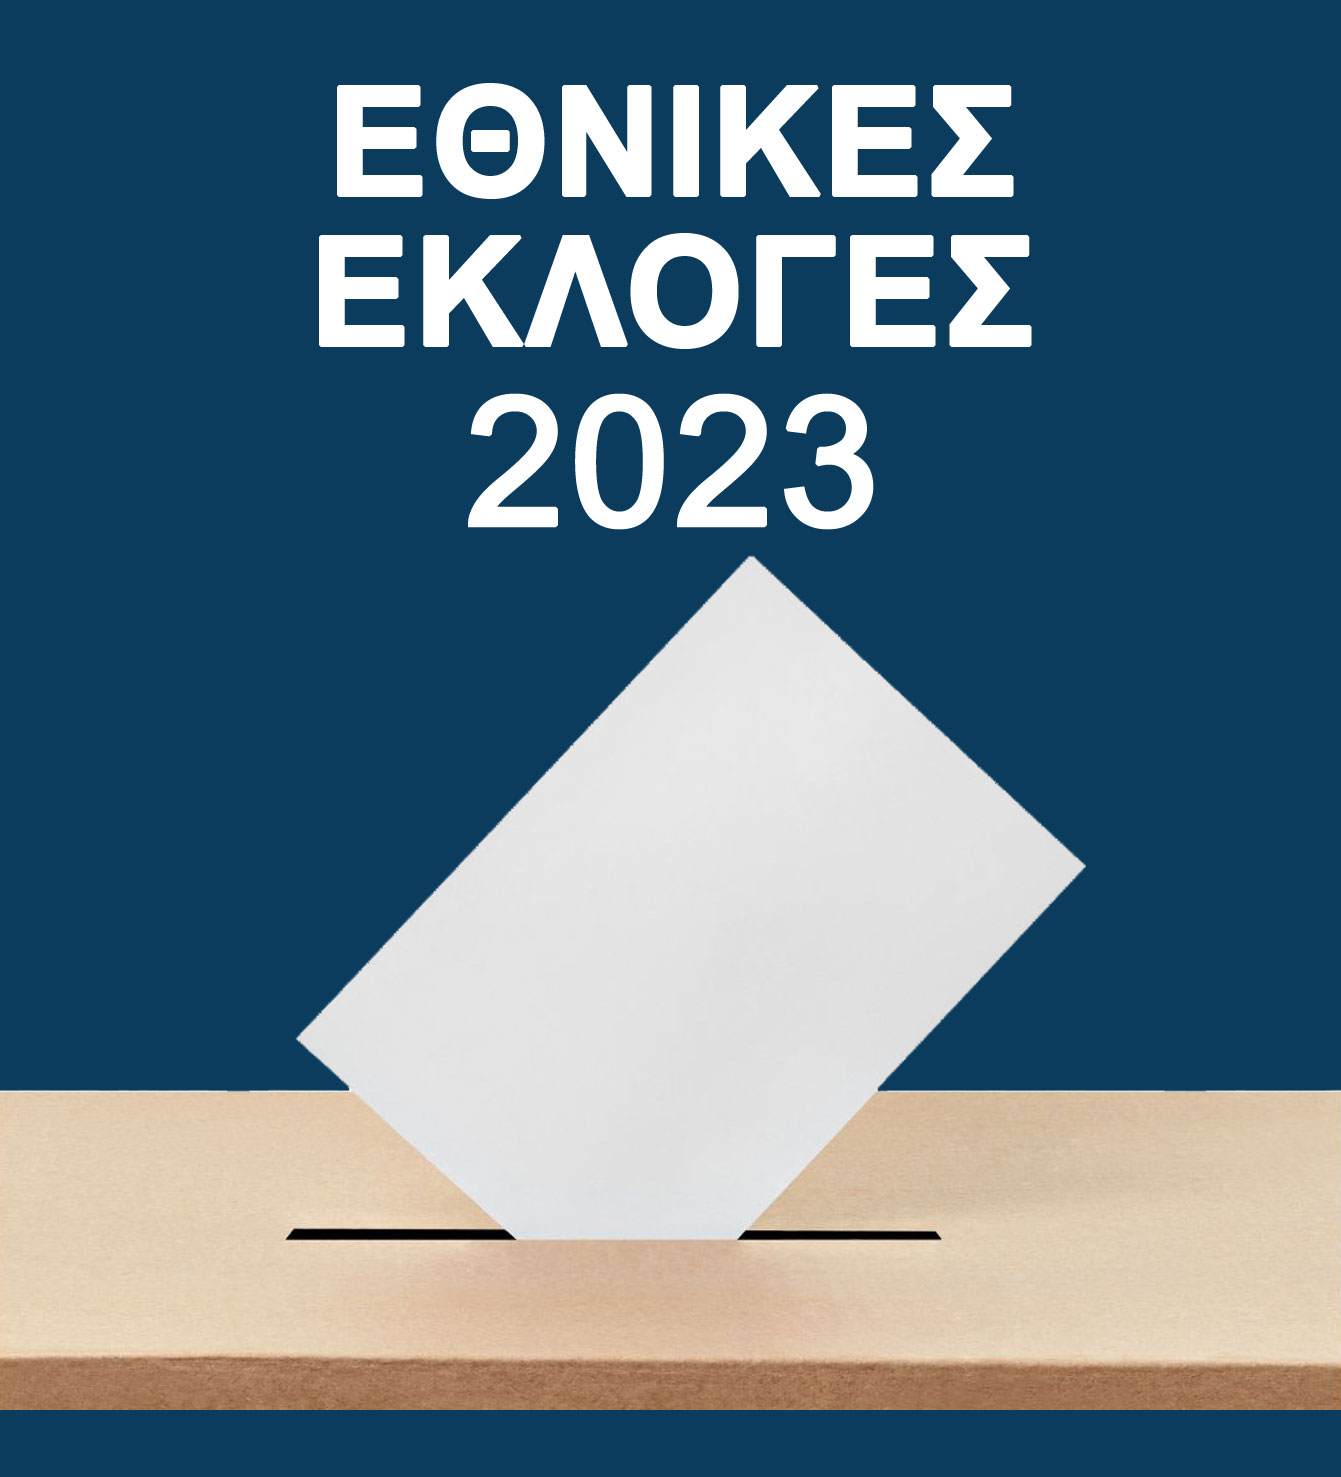 Eκλογείς που δεν θα μπορέσουν να ασκήσουν το εκλογικό τους δικαίωμα στις γενικές βουλευτικές εκλογές της 21ης Μαΐου 2023